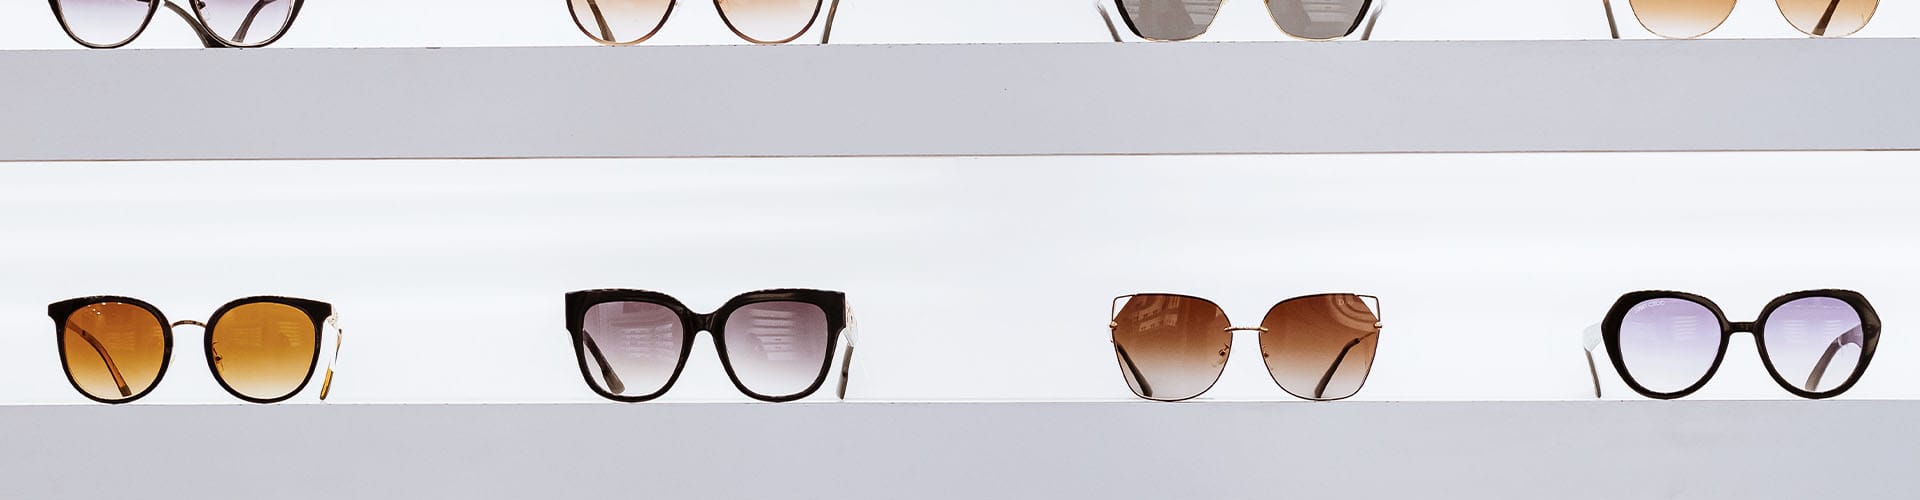 Sunglasses, SEE 20/20 Optometry